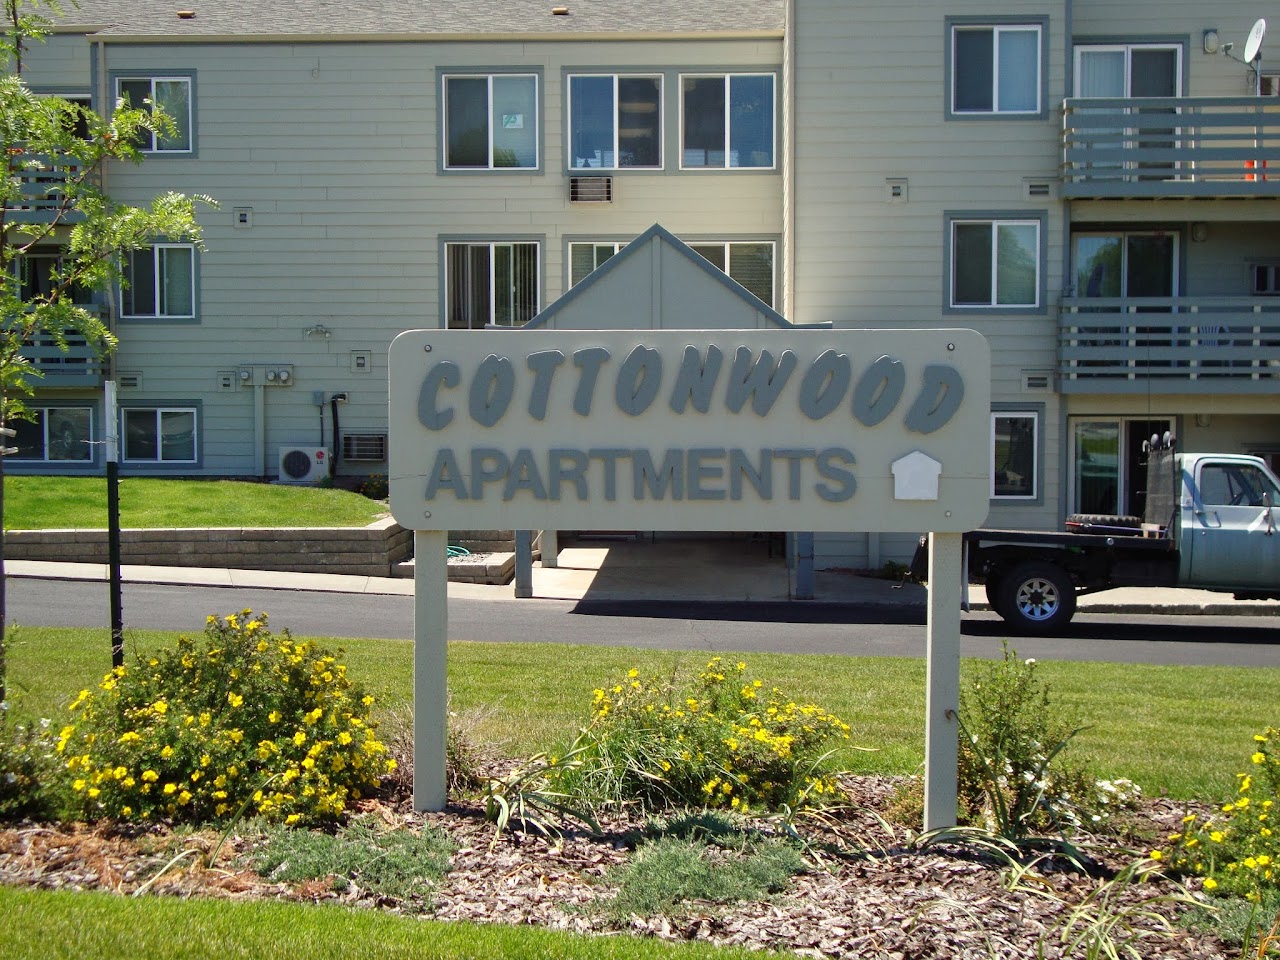 Photo of COTTONWOOD I. Affordable housing located at 610 SE SIXTH ST HERMISTON, OR 97838